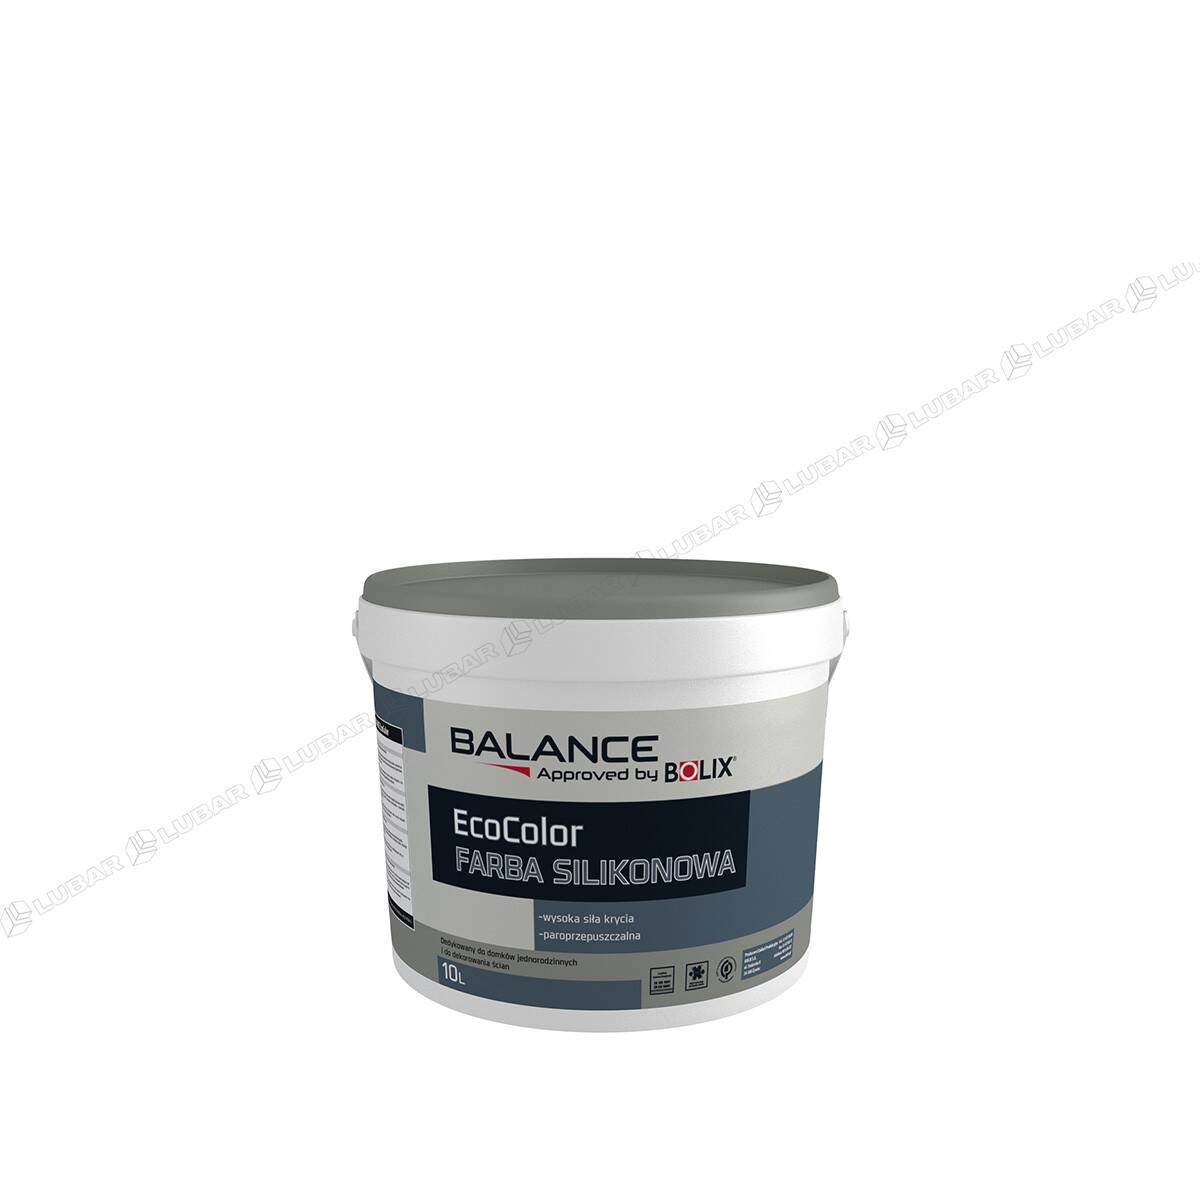 BOLIX Balance EcoColor Farba silikonowa 2,5l